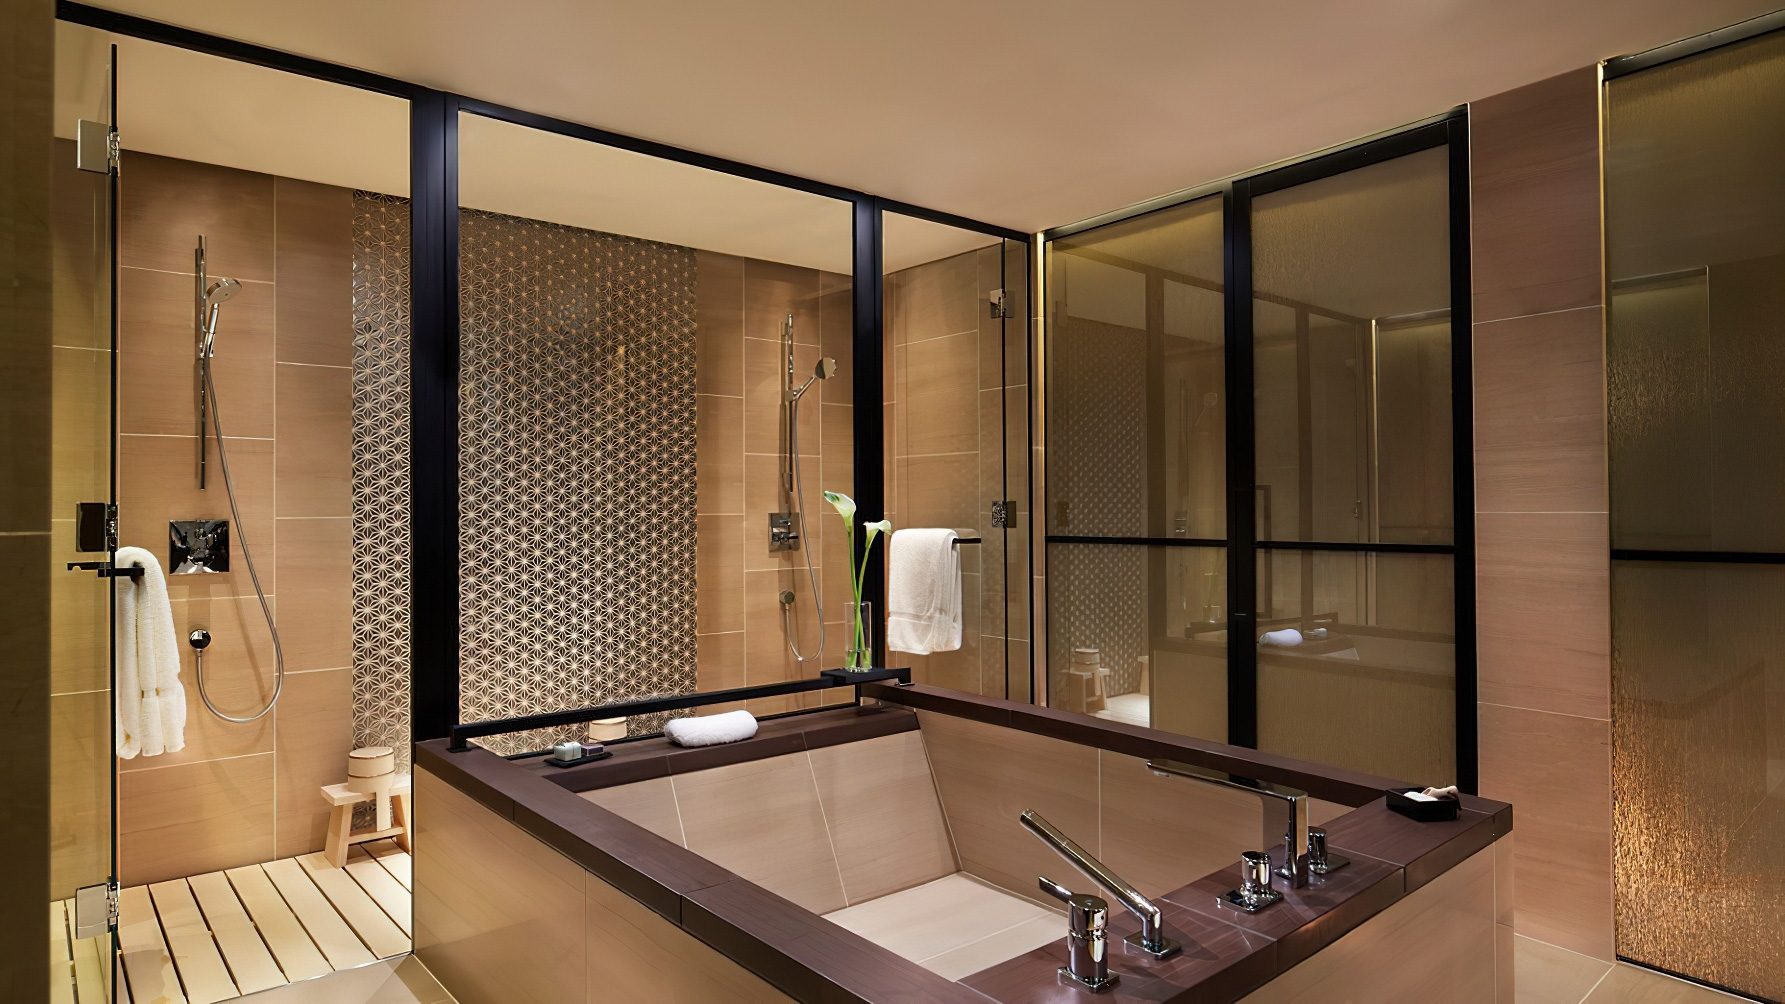 The Ritz-Carlton, Kyoto Hotel – Nakagyo Ward, Kyoto, Japan – The Ritz-Carlton Suite Bathroom